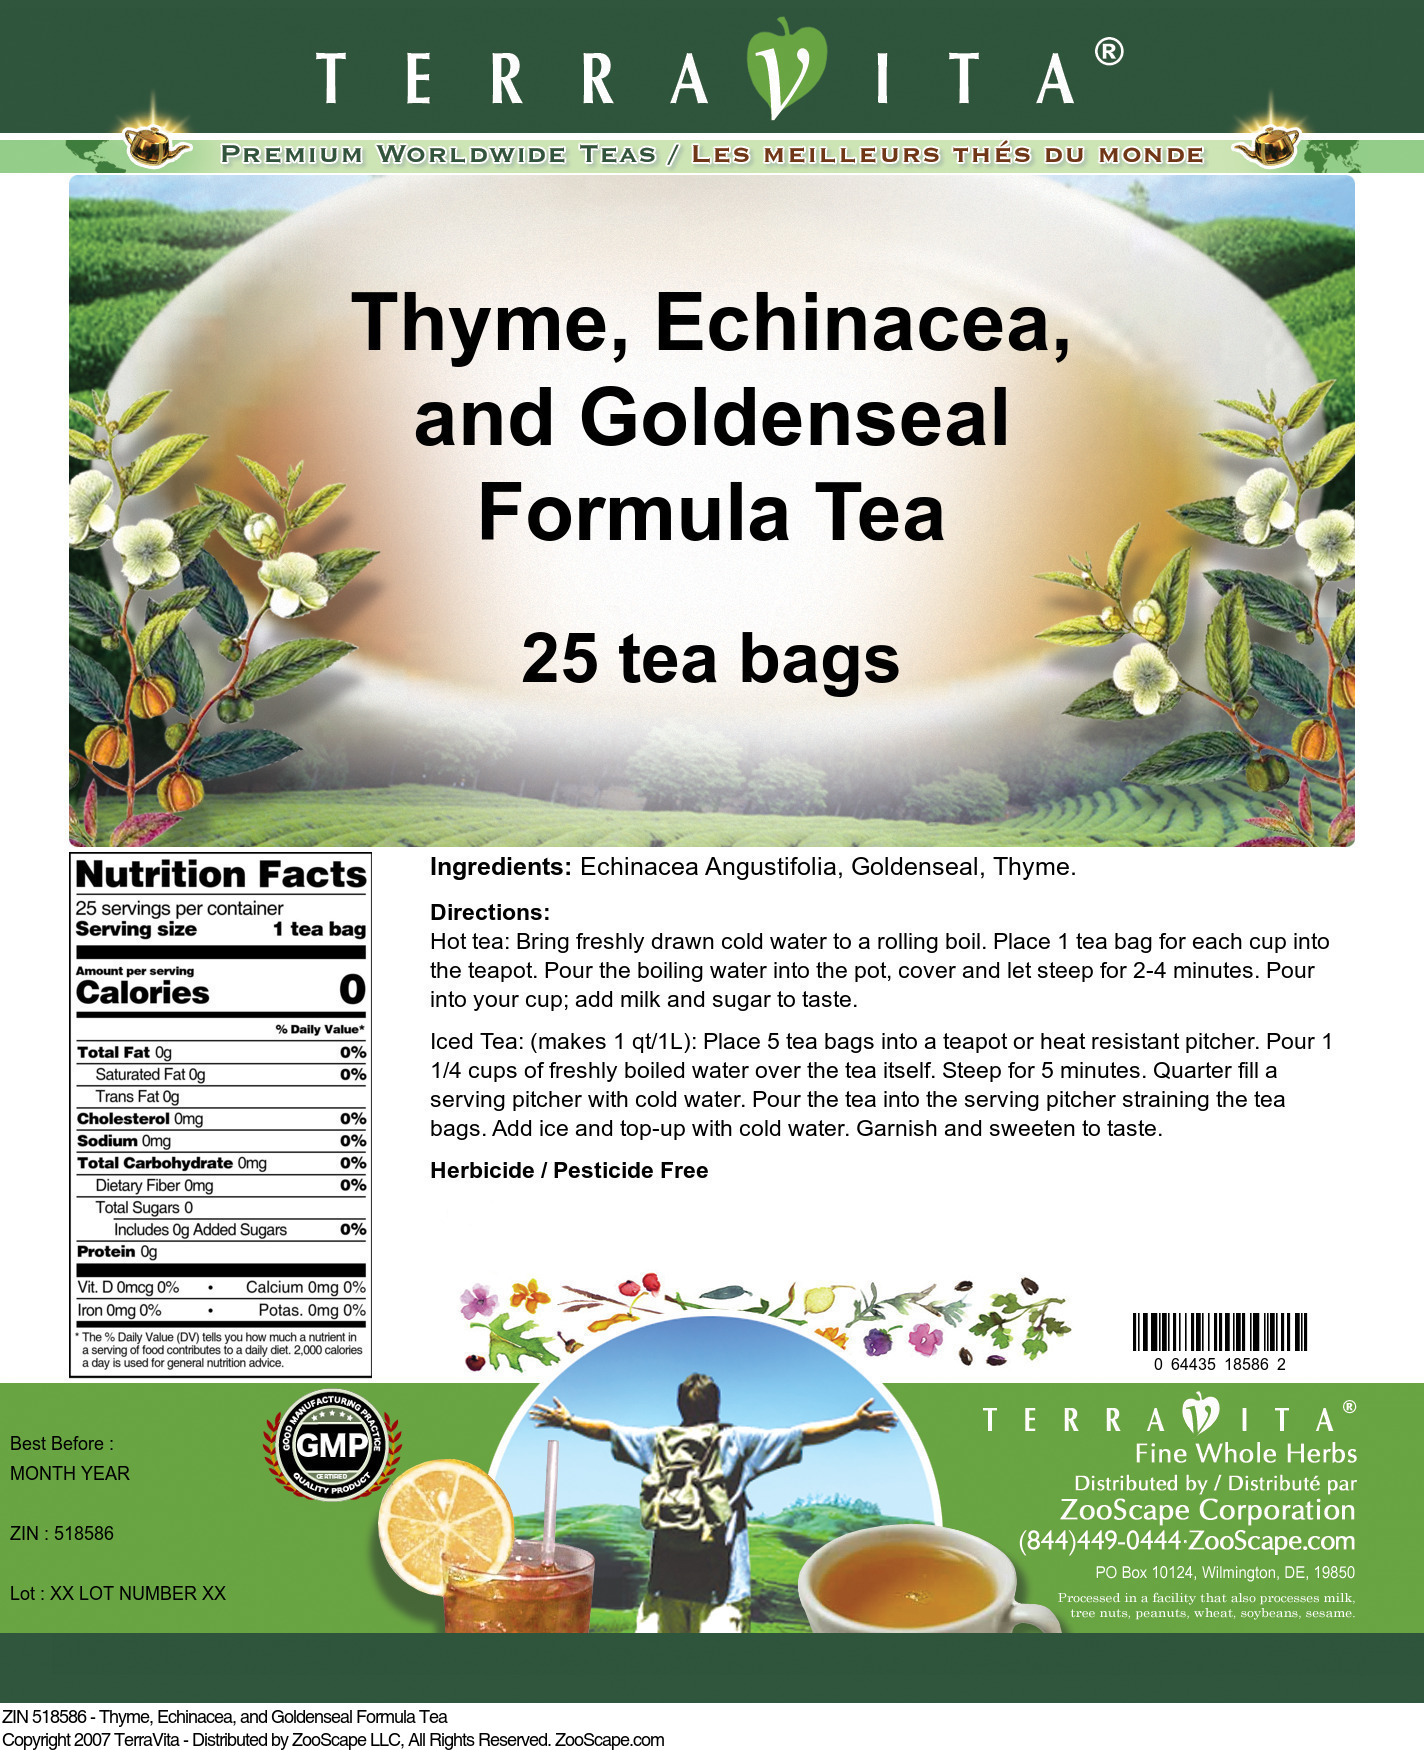 Thyme, Echinacea, and Goldenseal Formula Tea - Label